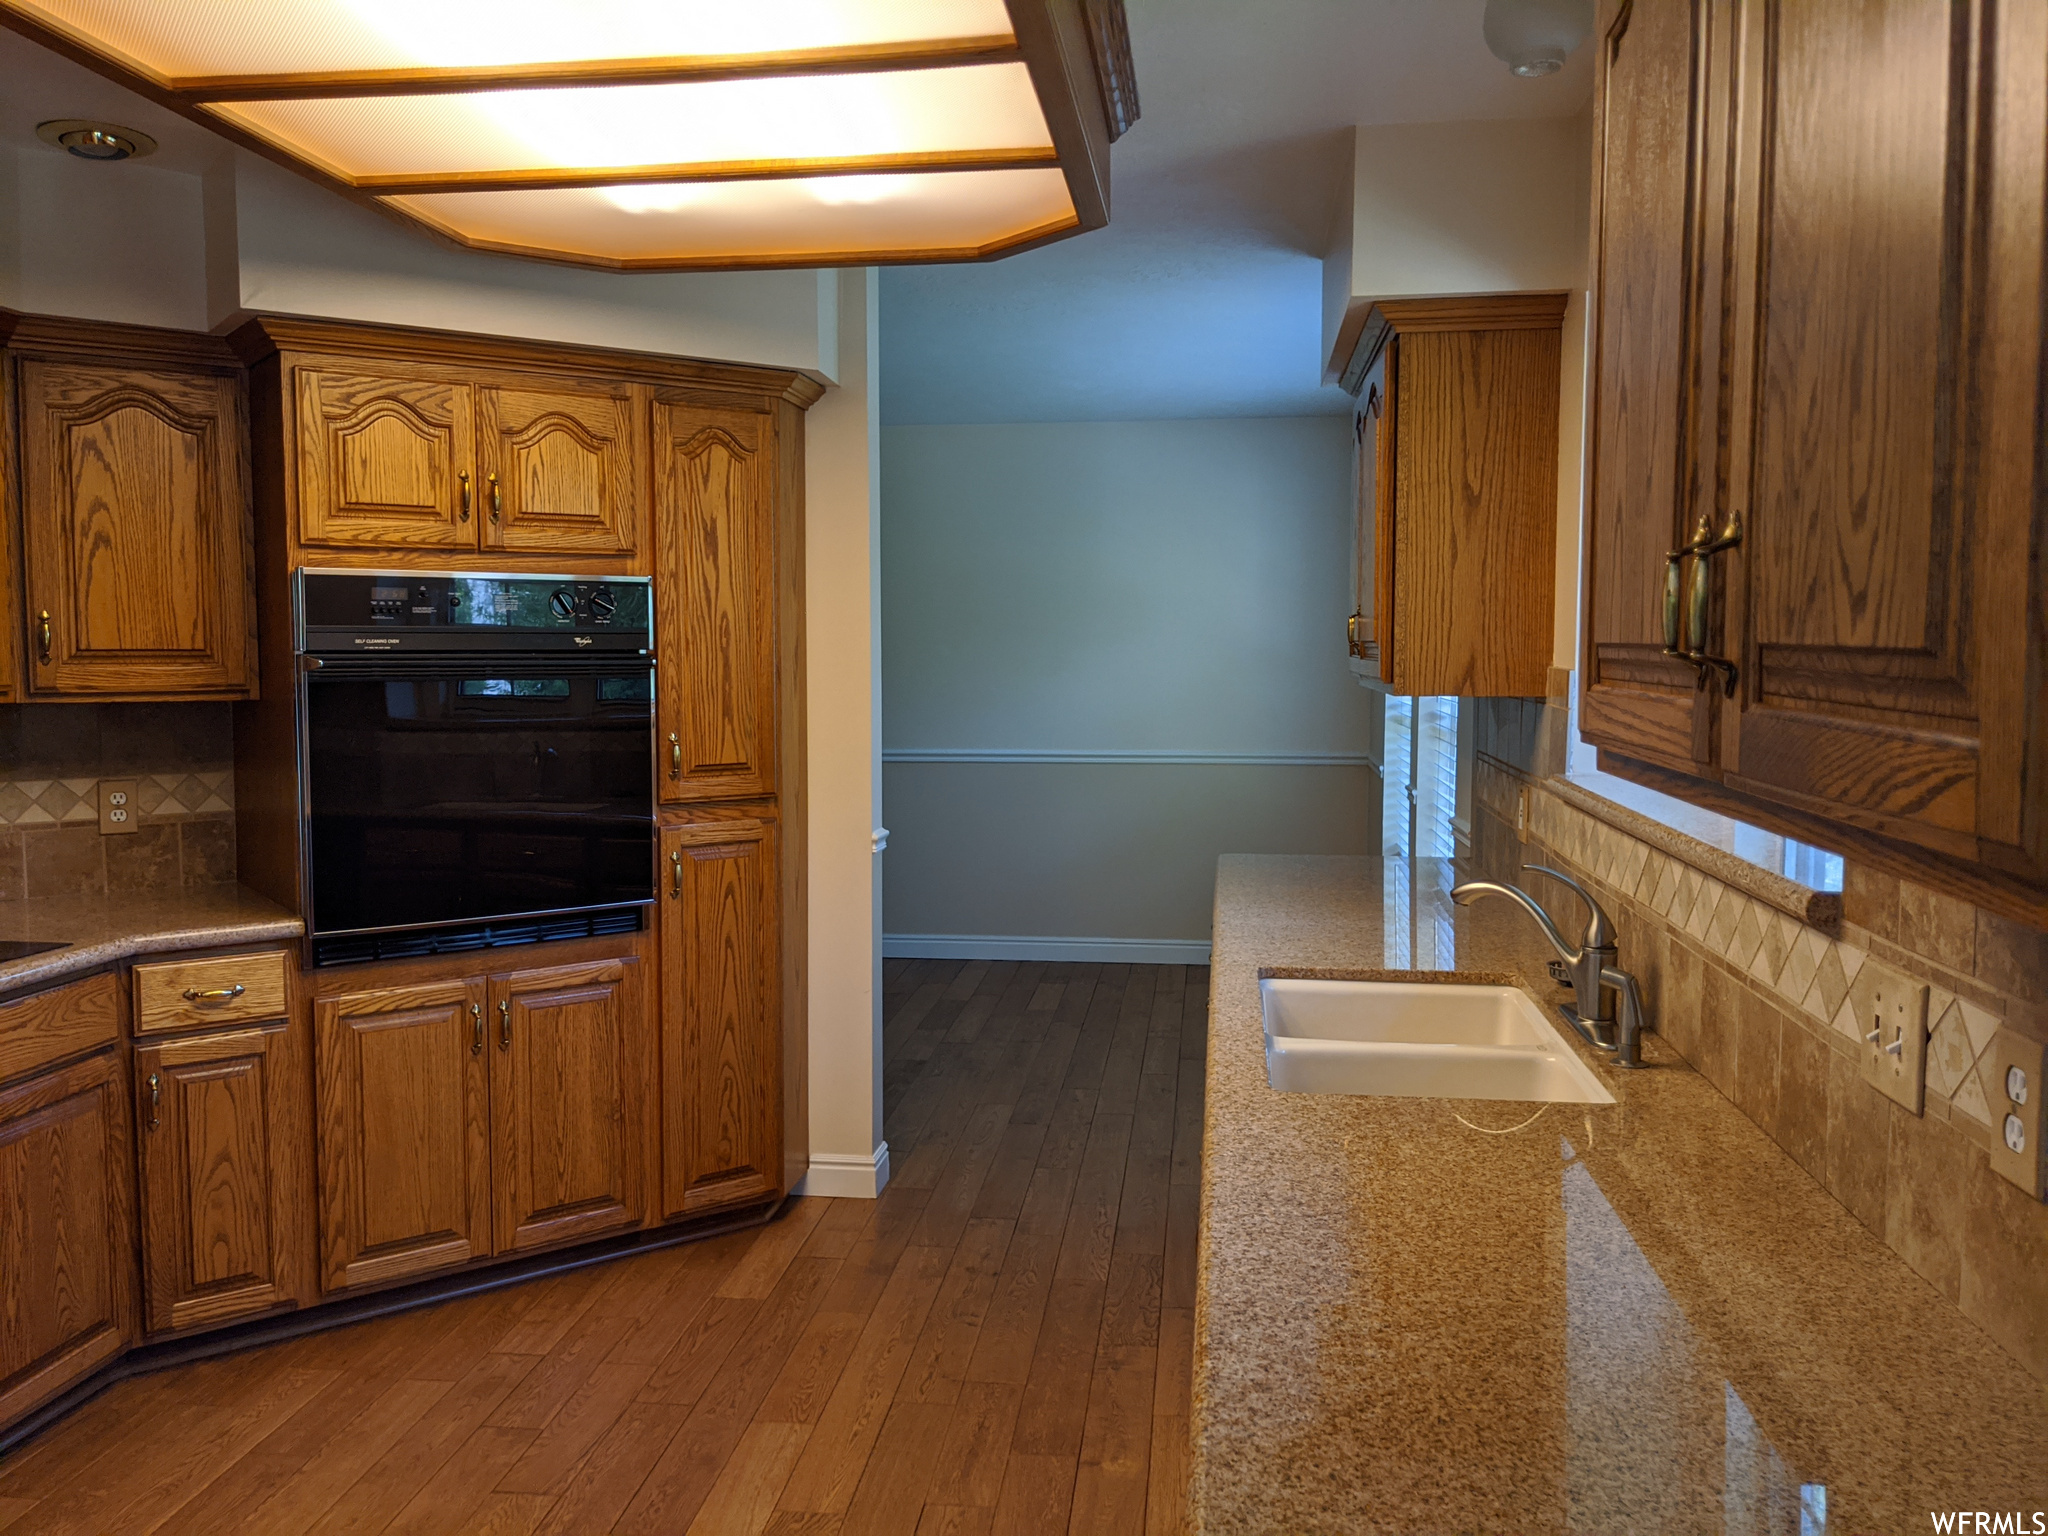 Kitchen with backsplash, brown cabinets, light hardwood floors, and black oven